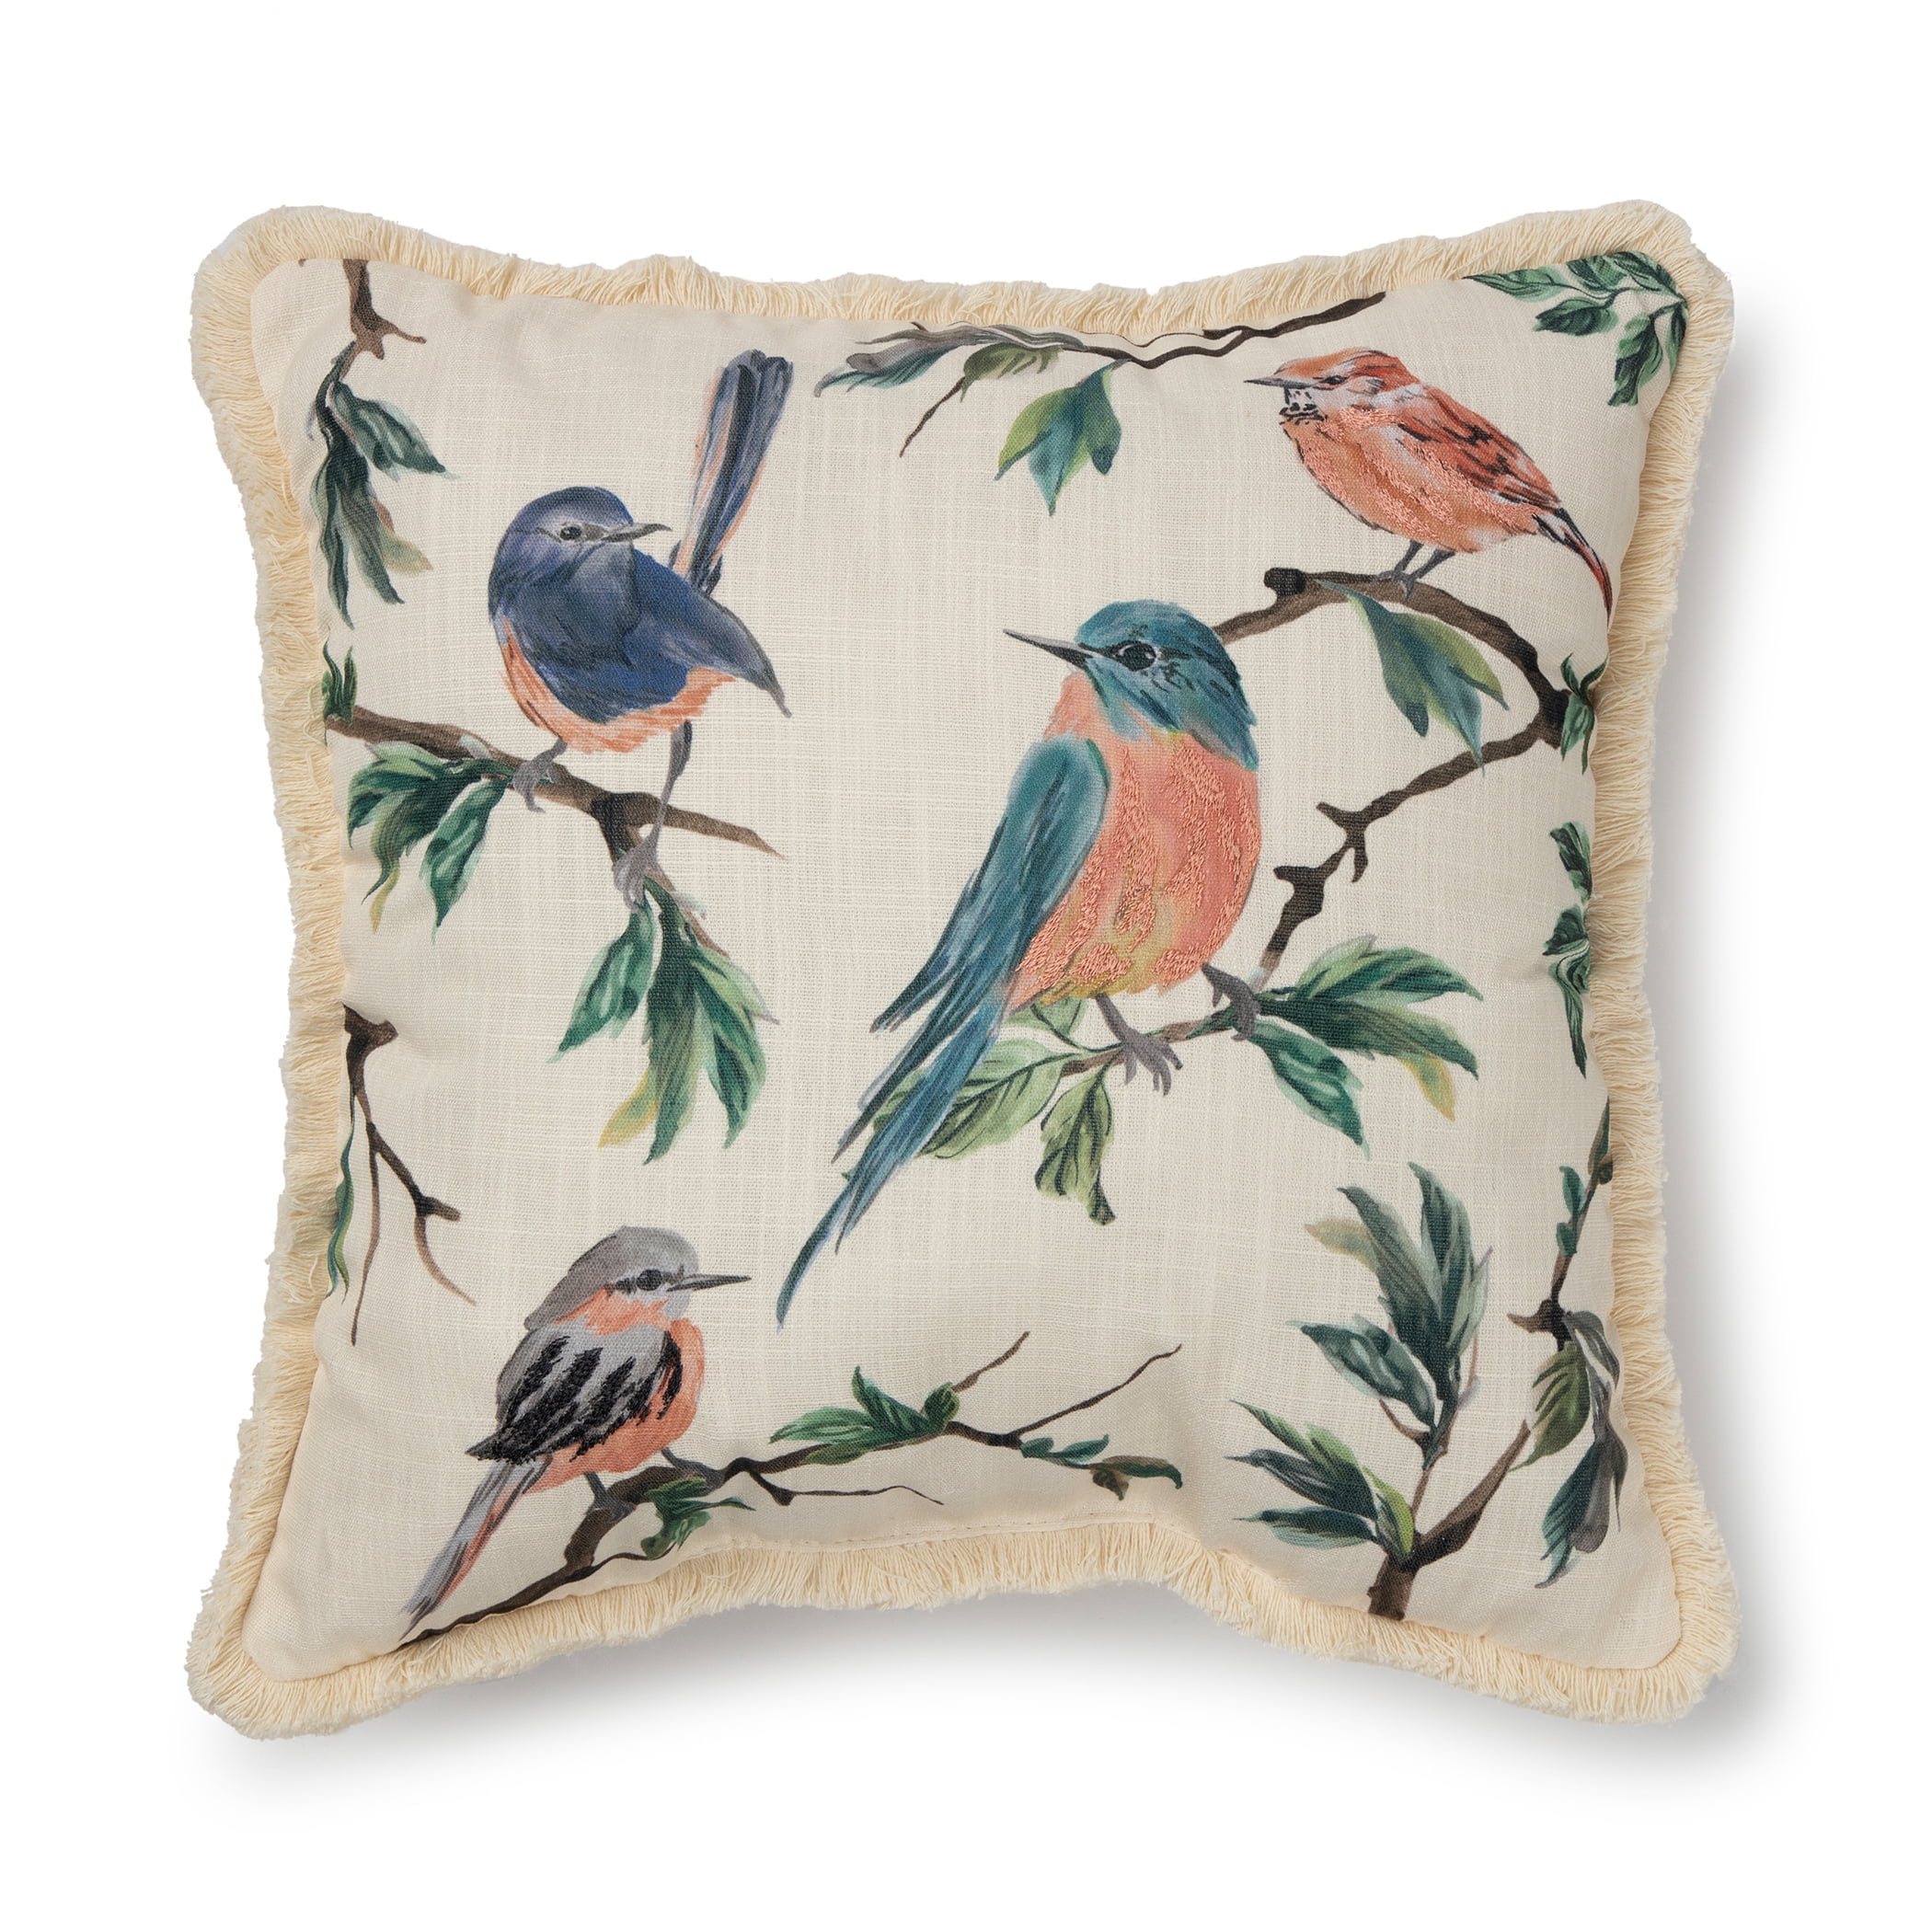 Just A Girl Who Loves Bird Watching Throw Pillow Multicolor Birding Bird Watching birds idea Co 18x18